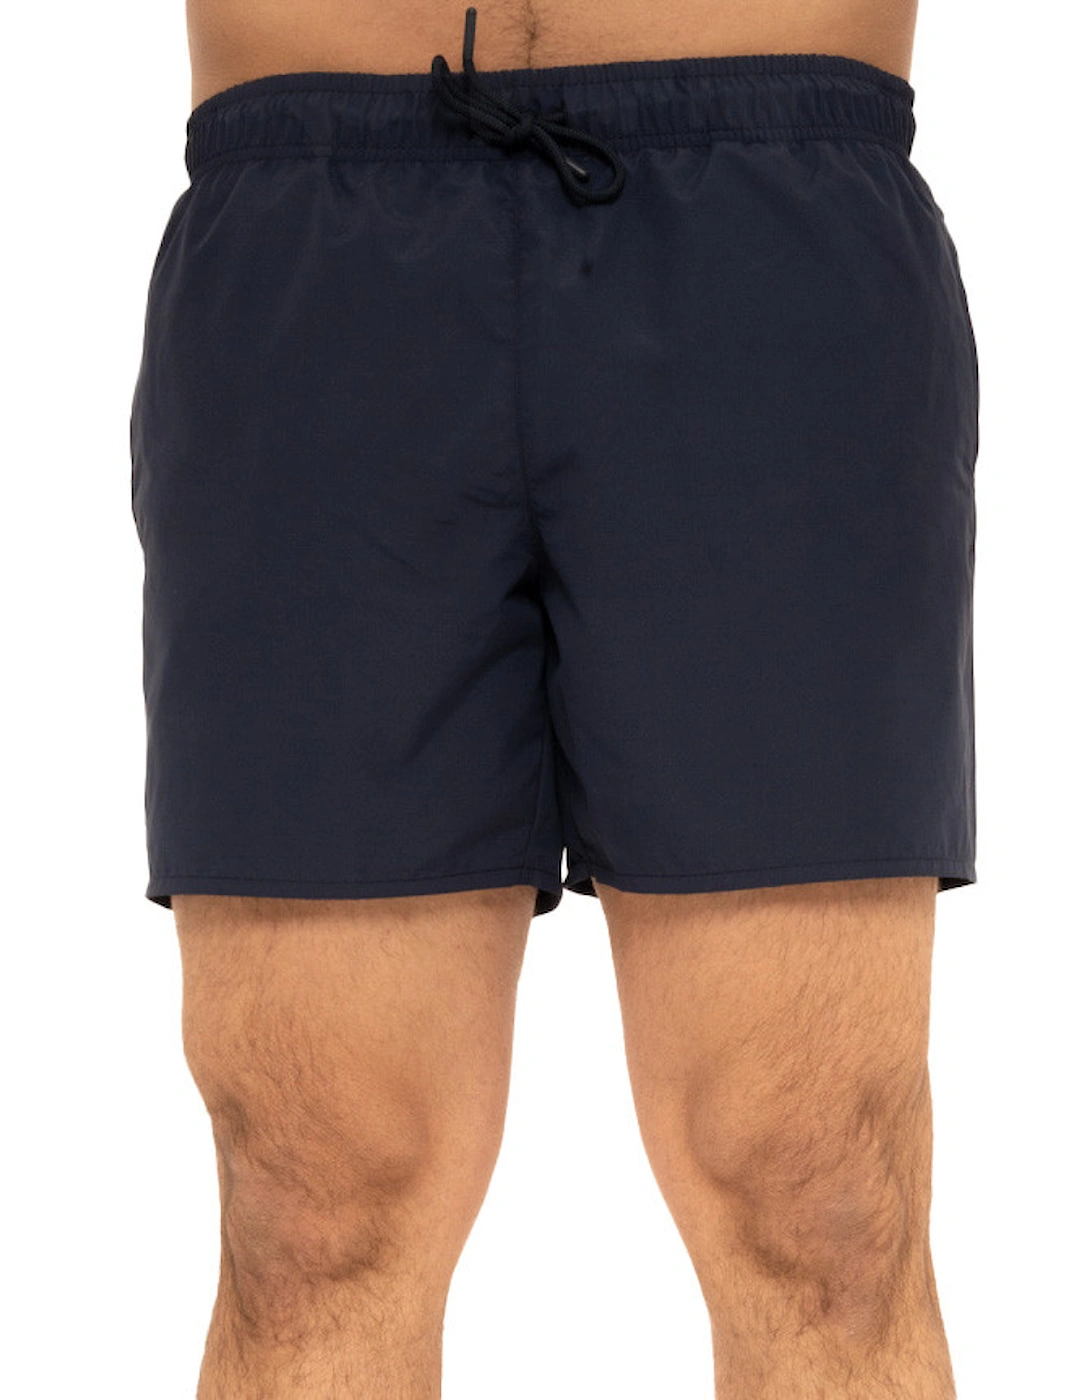 Mens Quick Dry Swim Shorts (Navy/Green)